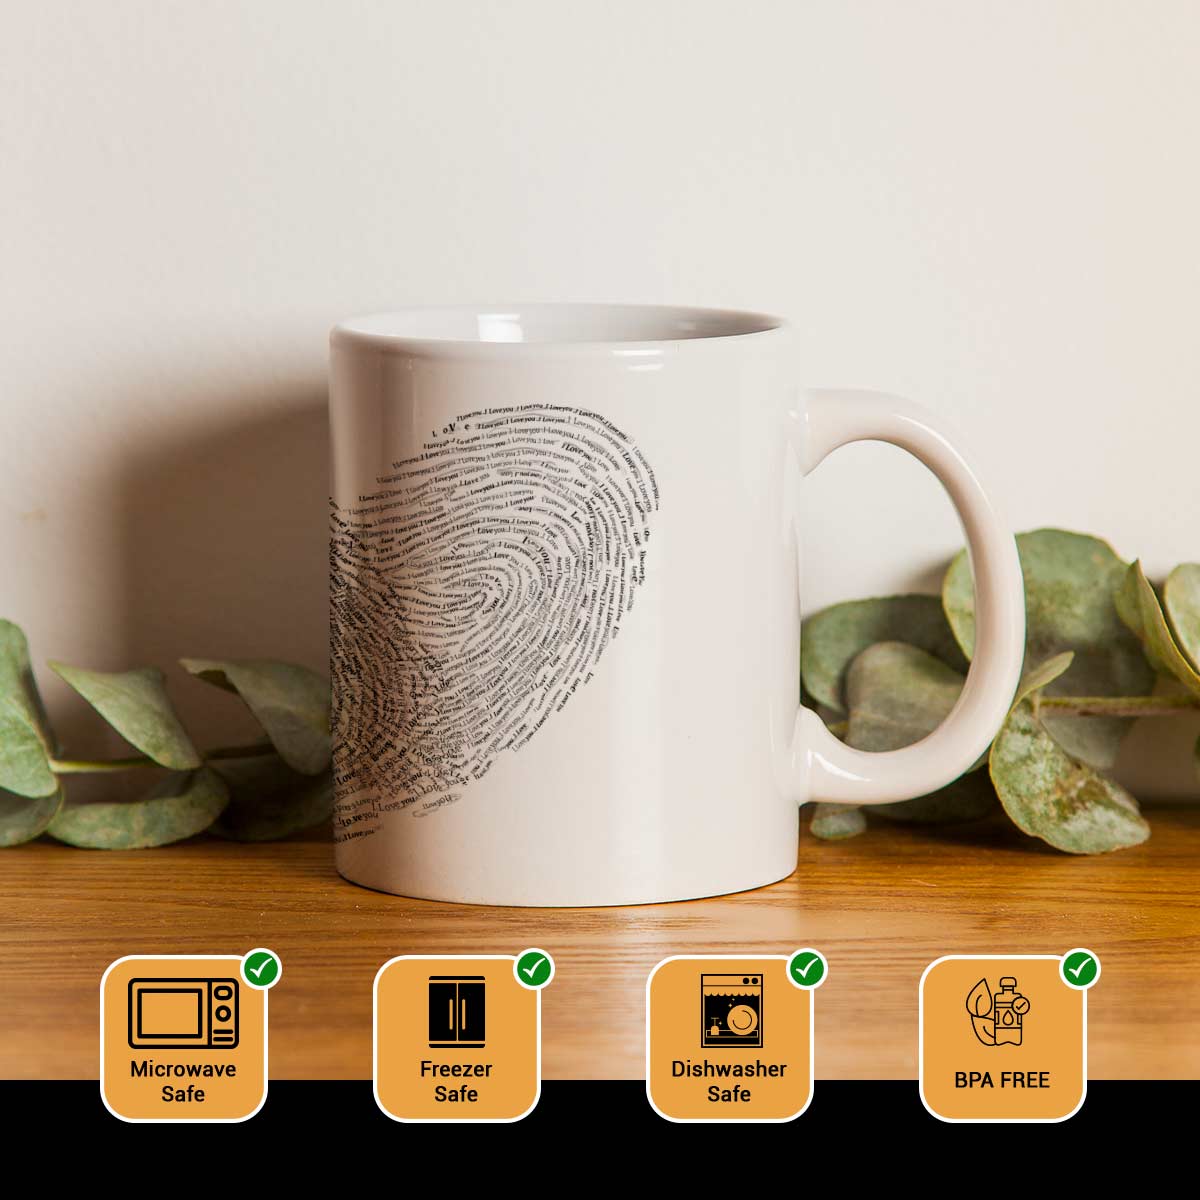 Interlocked Fingerprints Love Mug